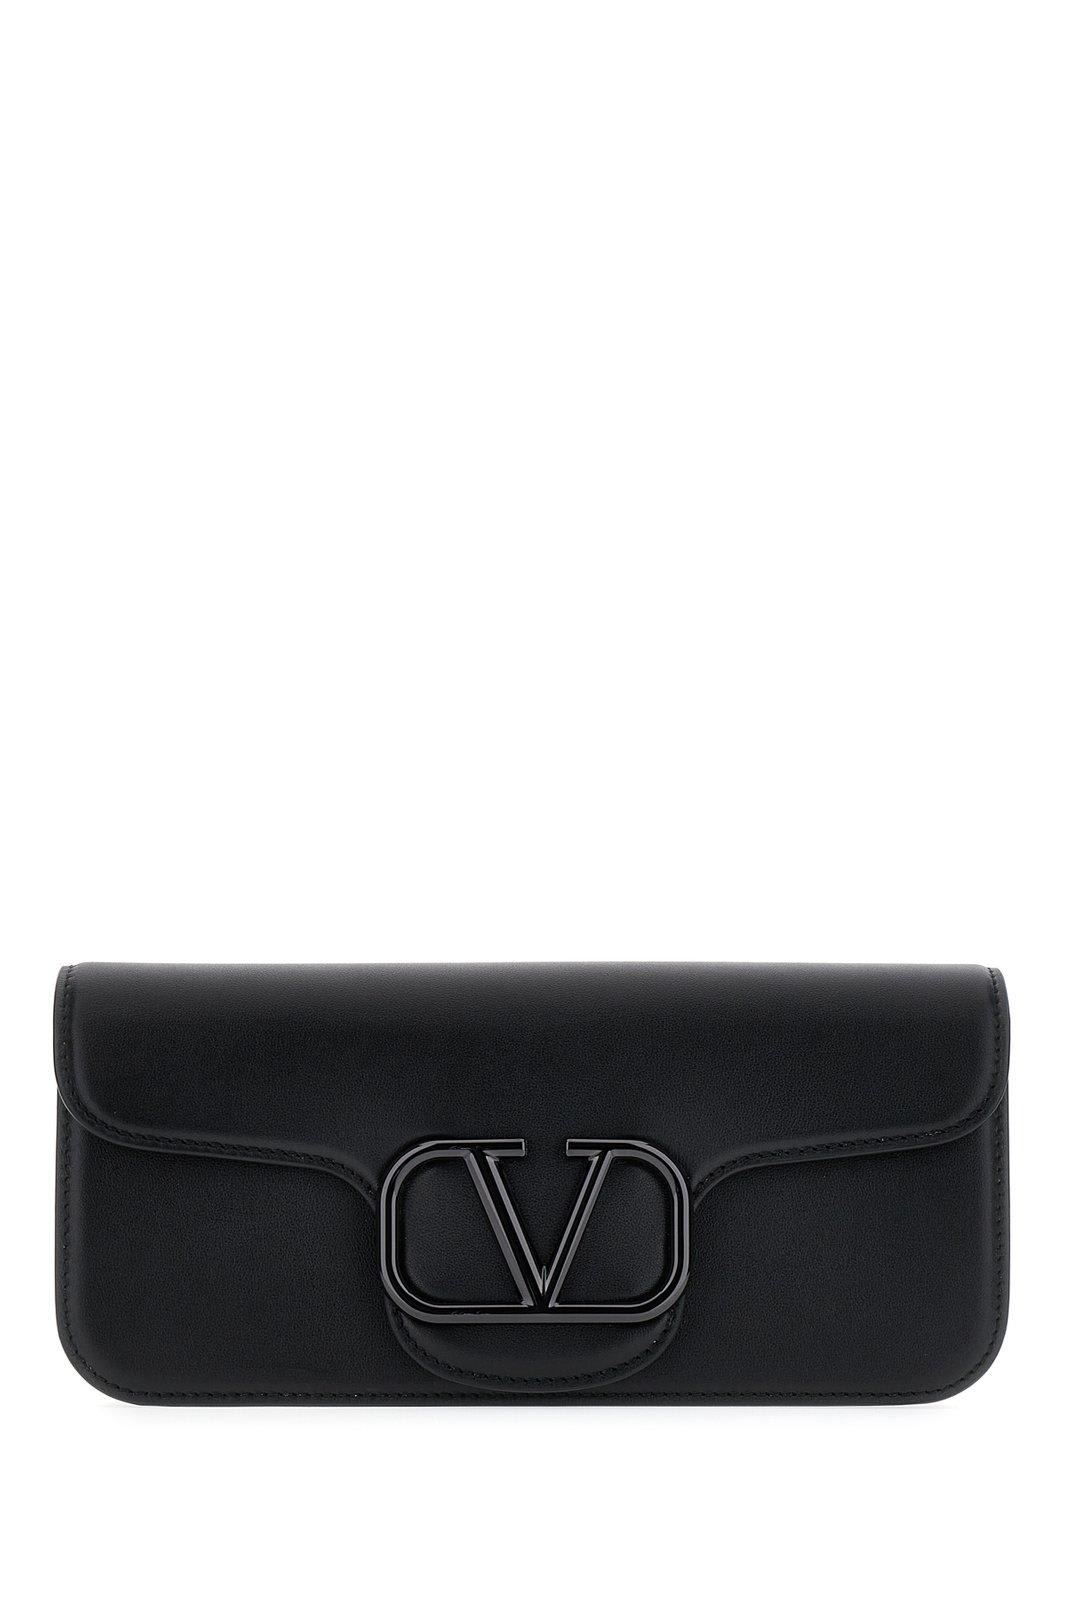 Valentino Garavani Vlogo Plaque Strapped Shoulder Bag In Black